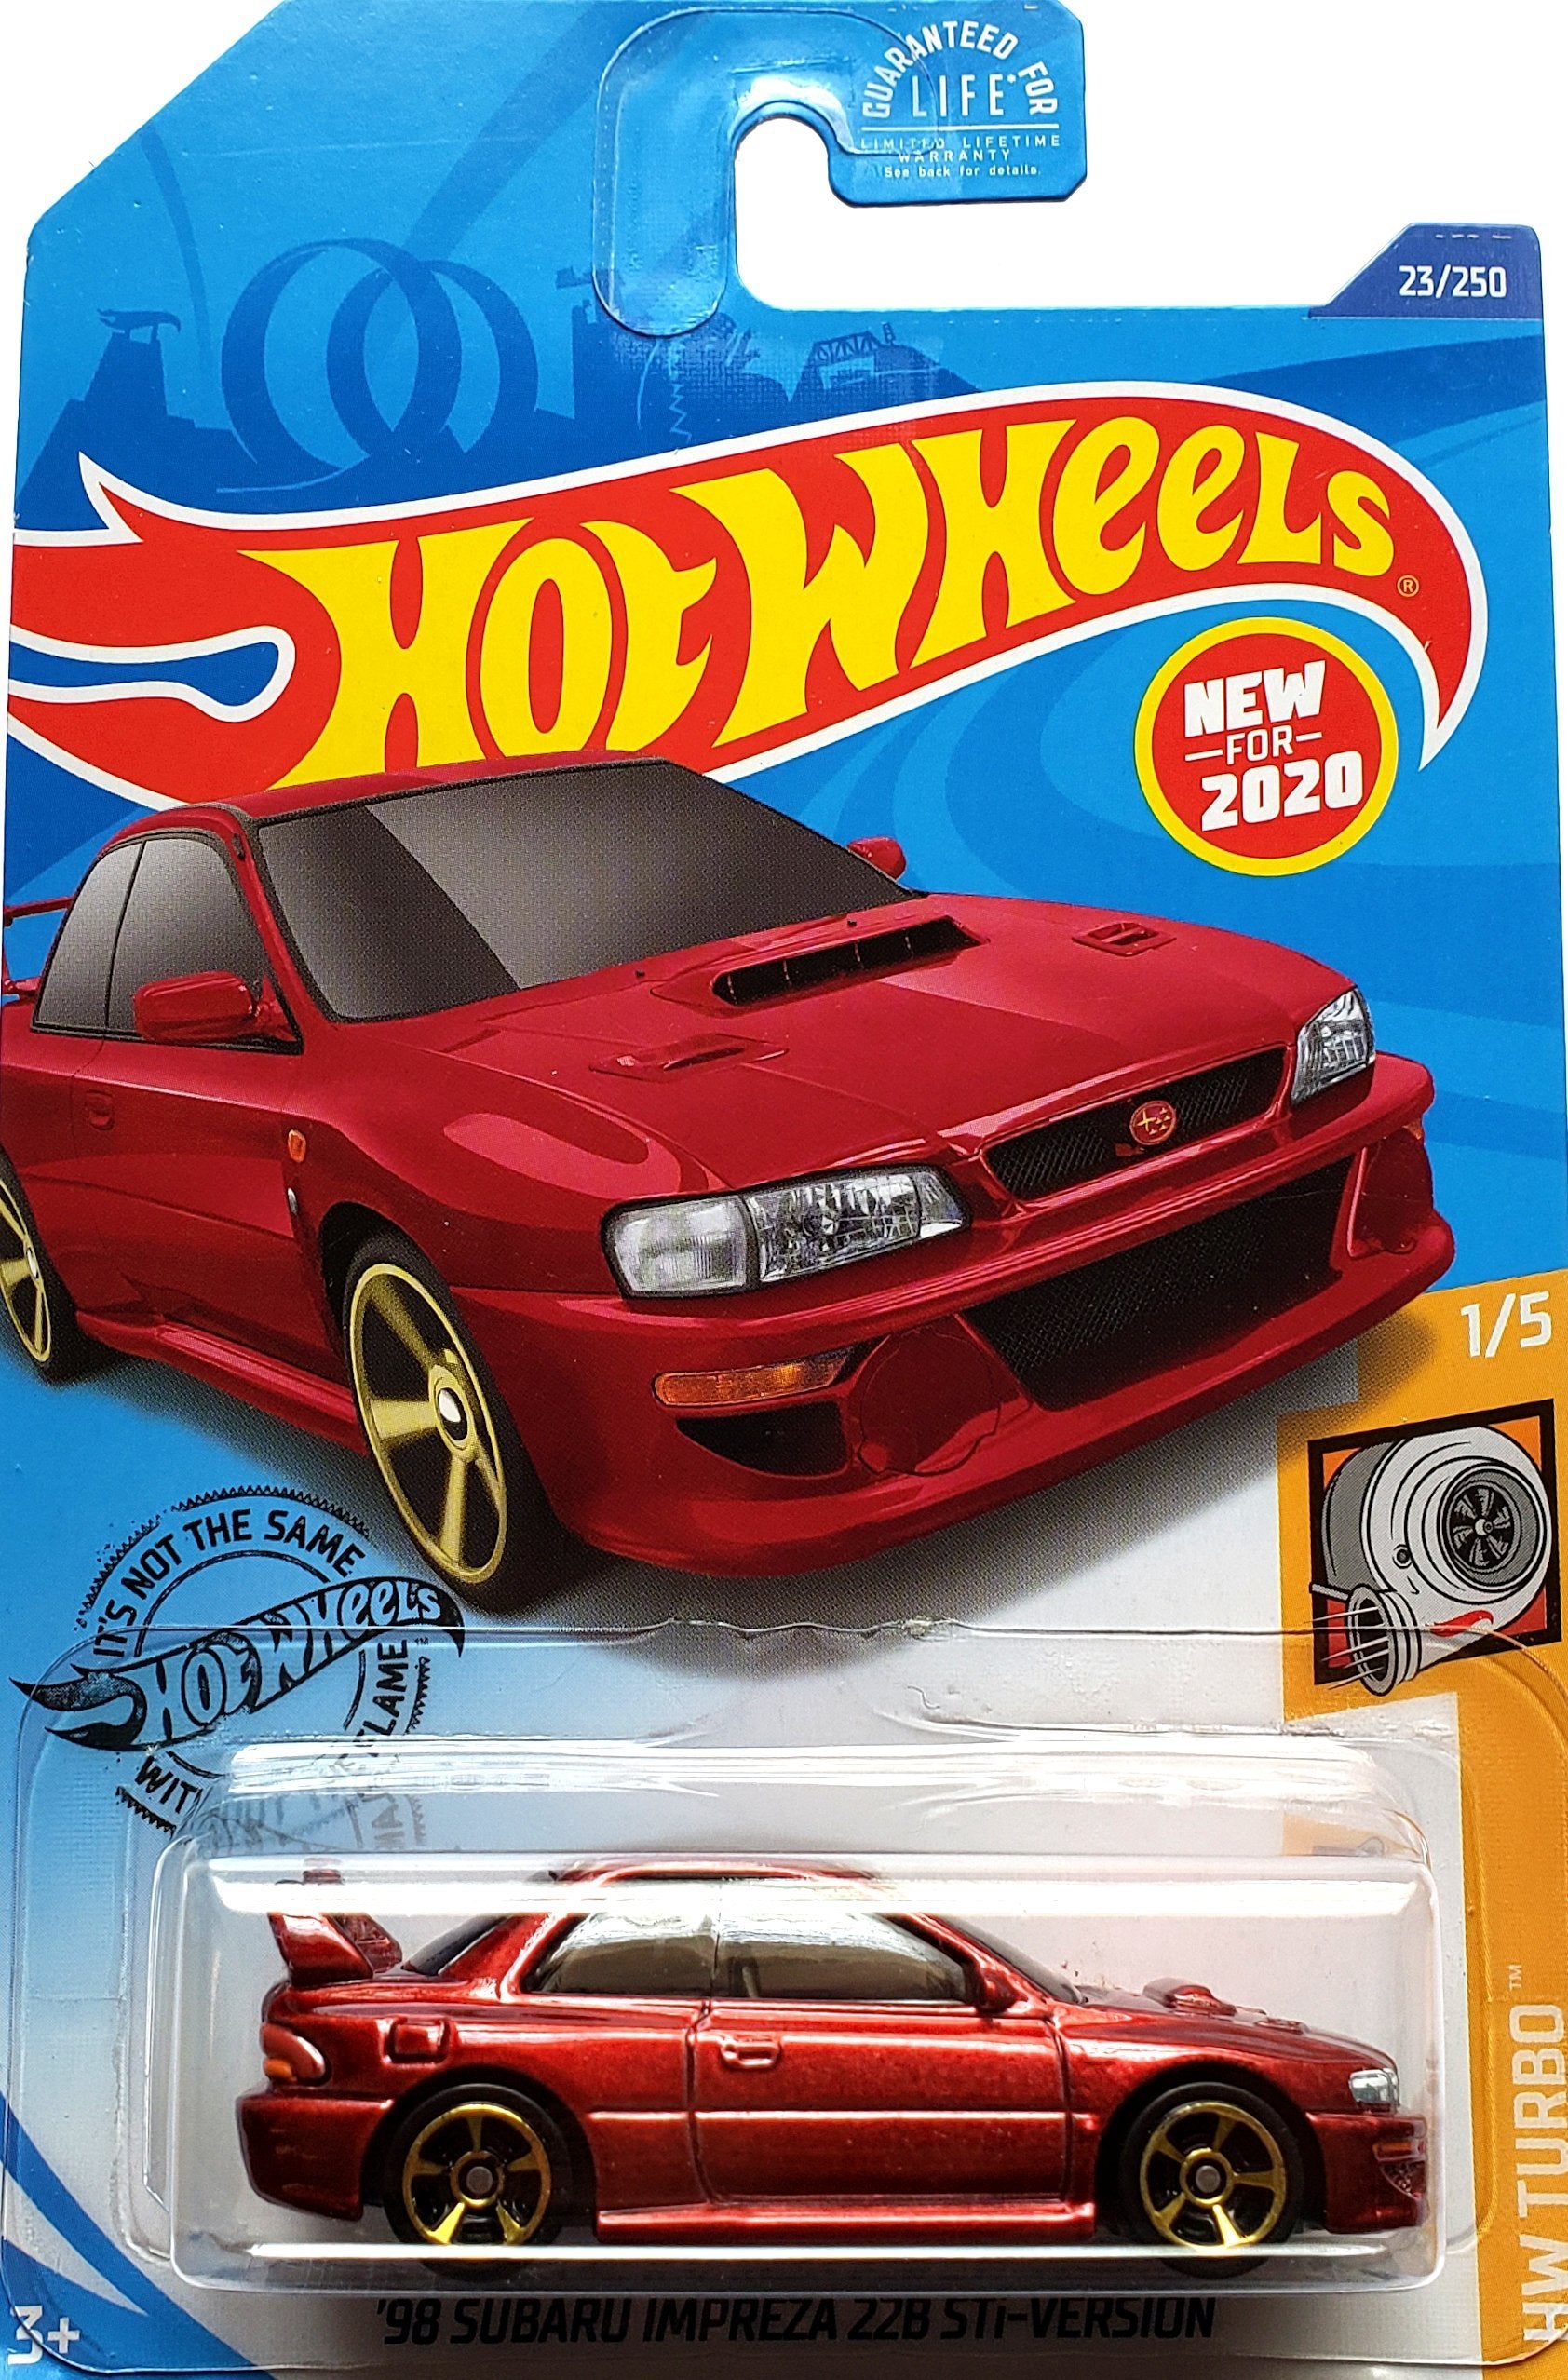 2020 Hot Wheels Mainline #023 - '98 Subaru Impreza 22b STi Version (Red) GHF06